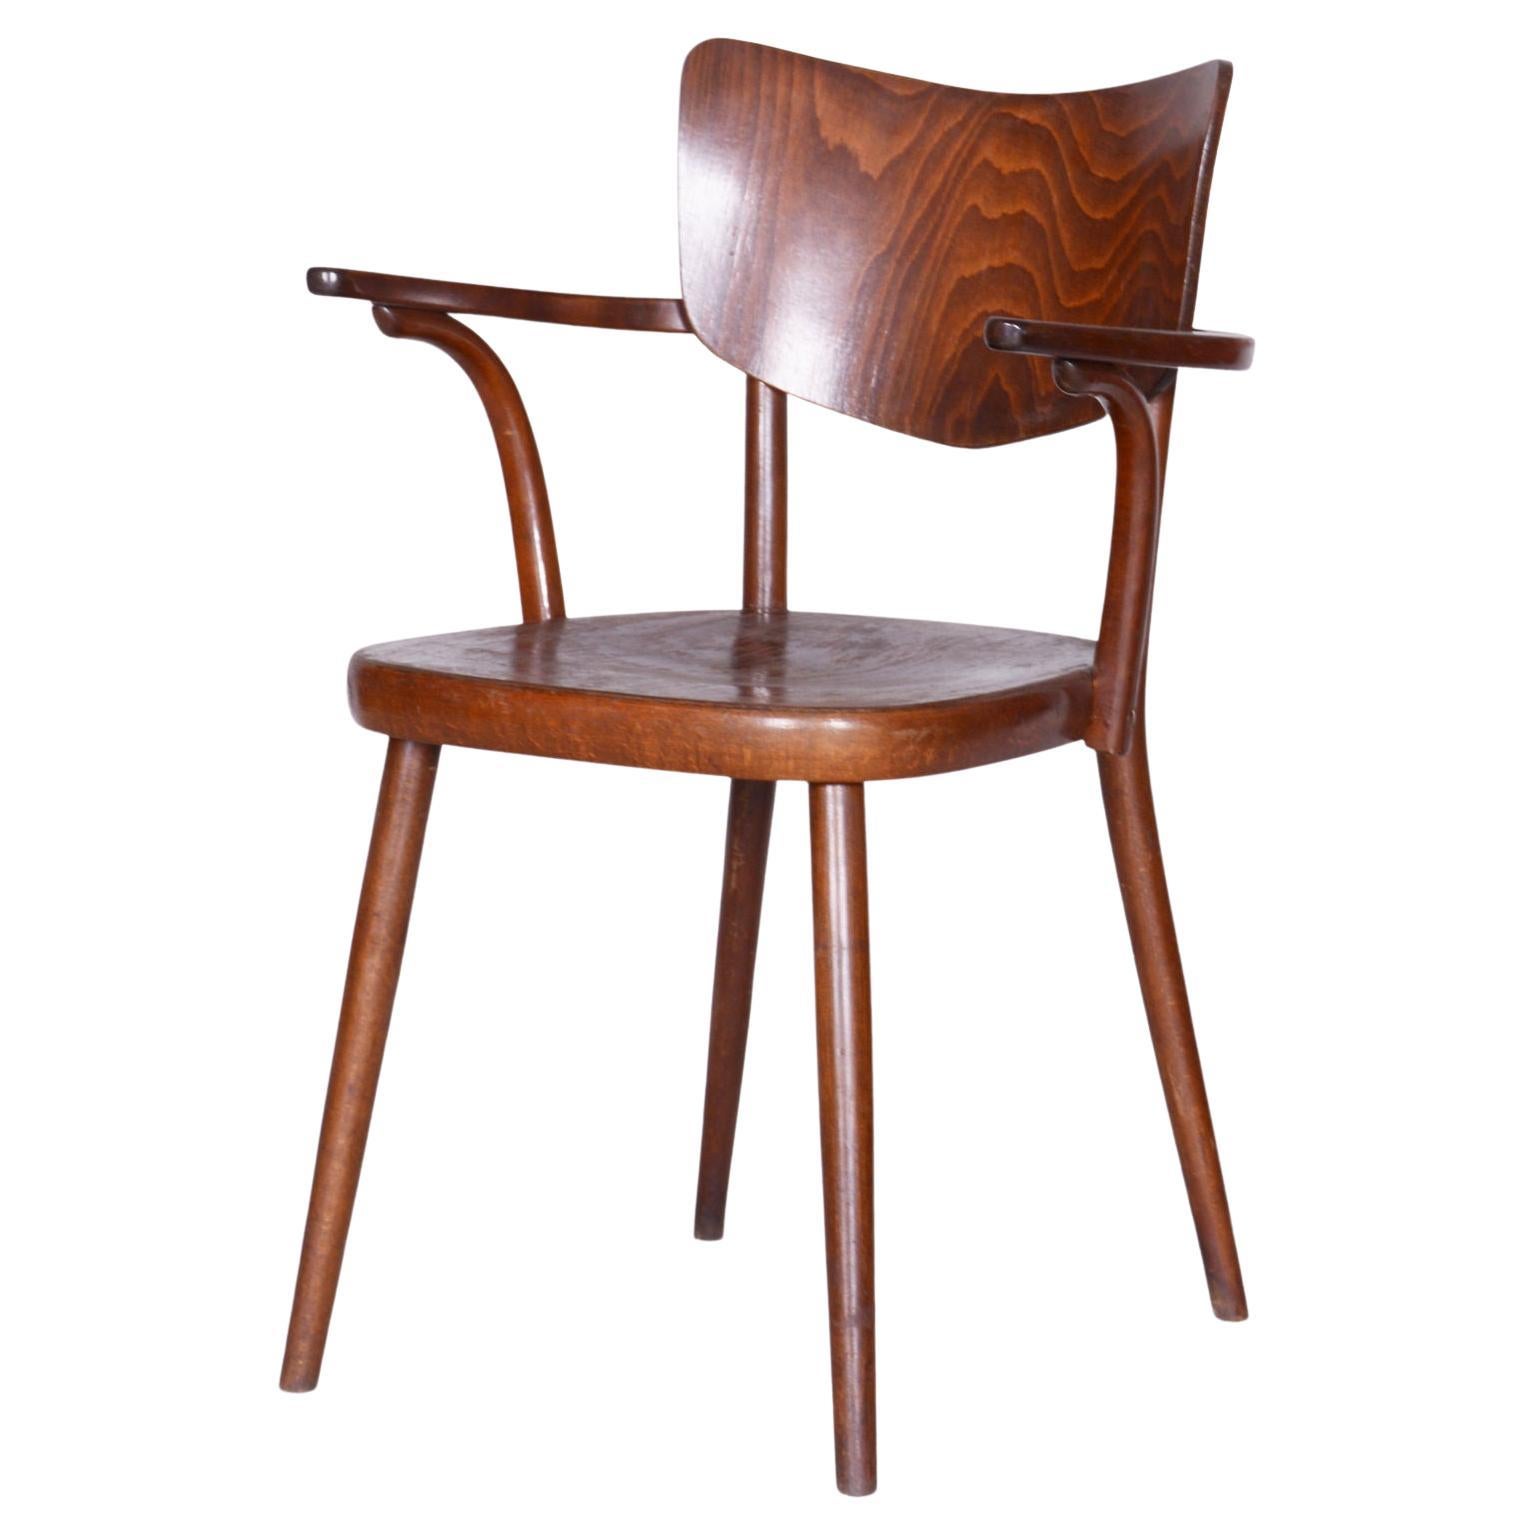 Original ArtDeco Beech Chair with Armrests by Ton, R. Hofman, Czechia, 1940s For Sale